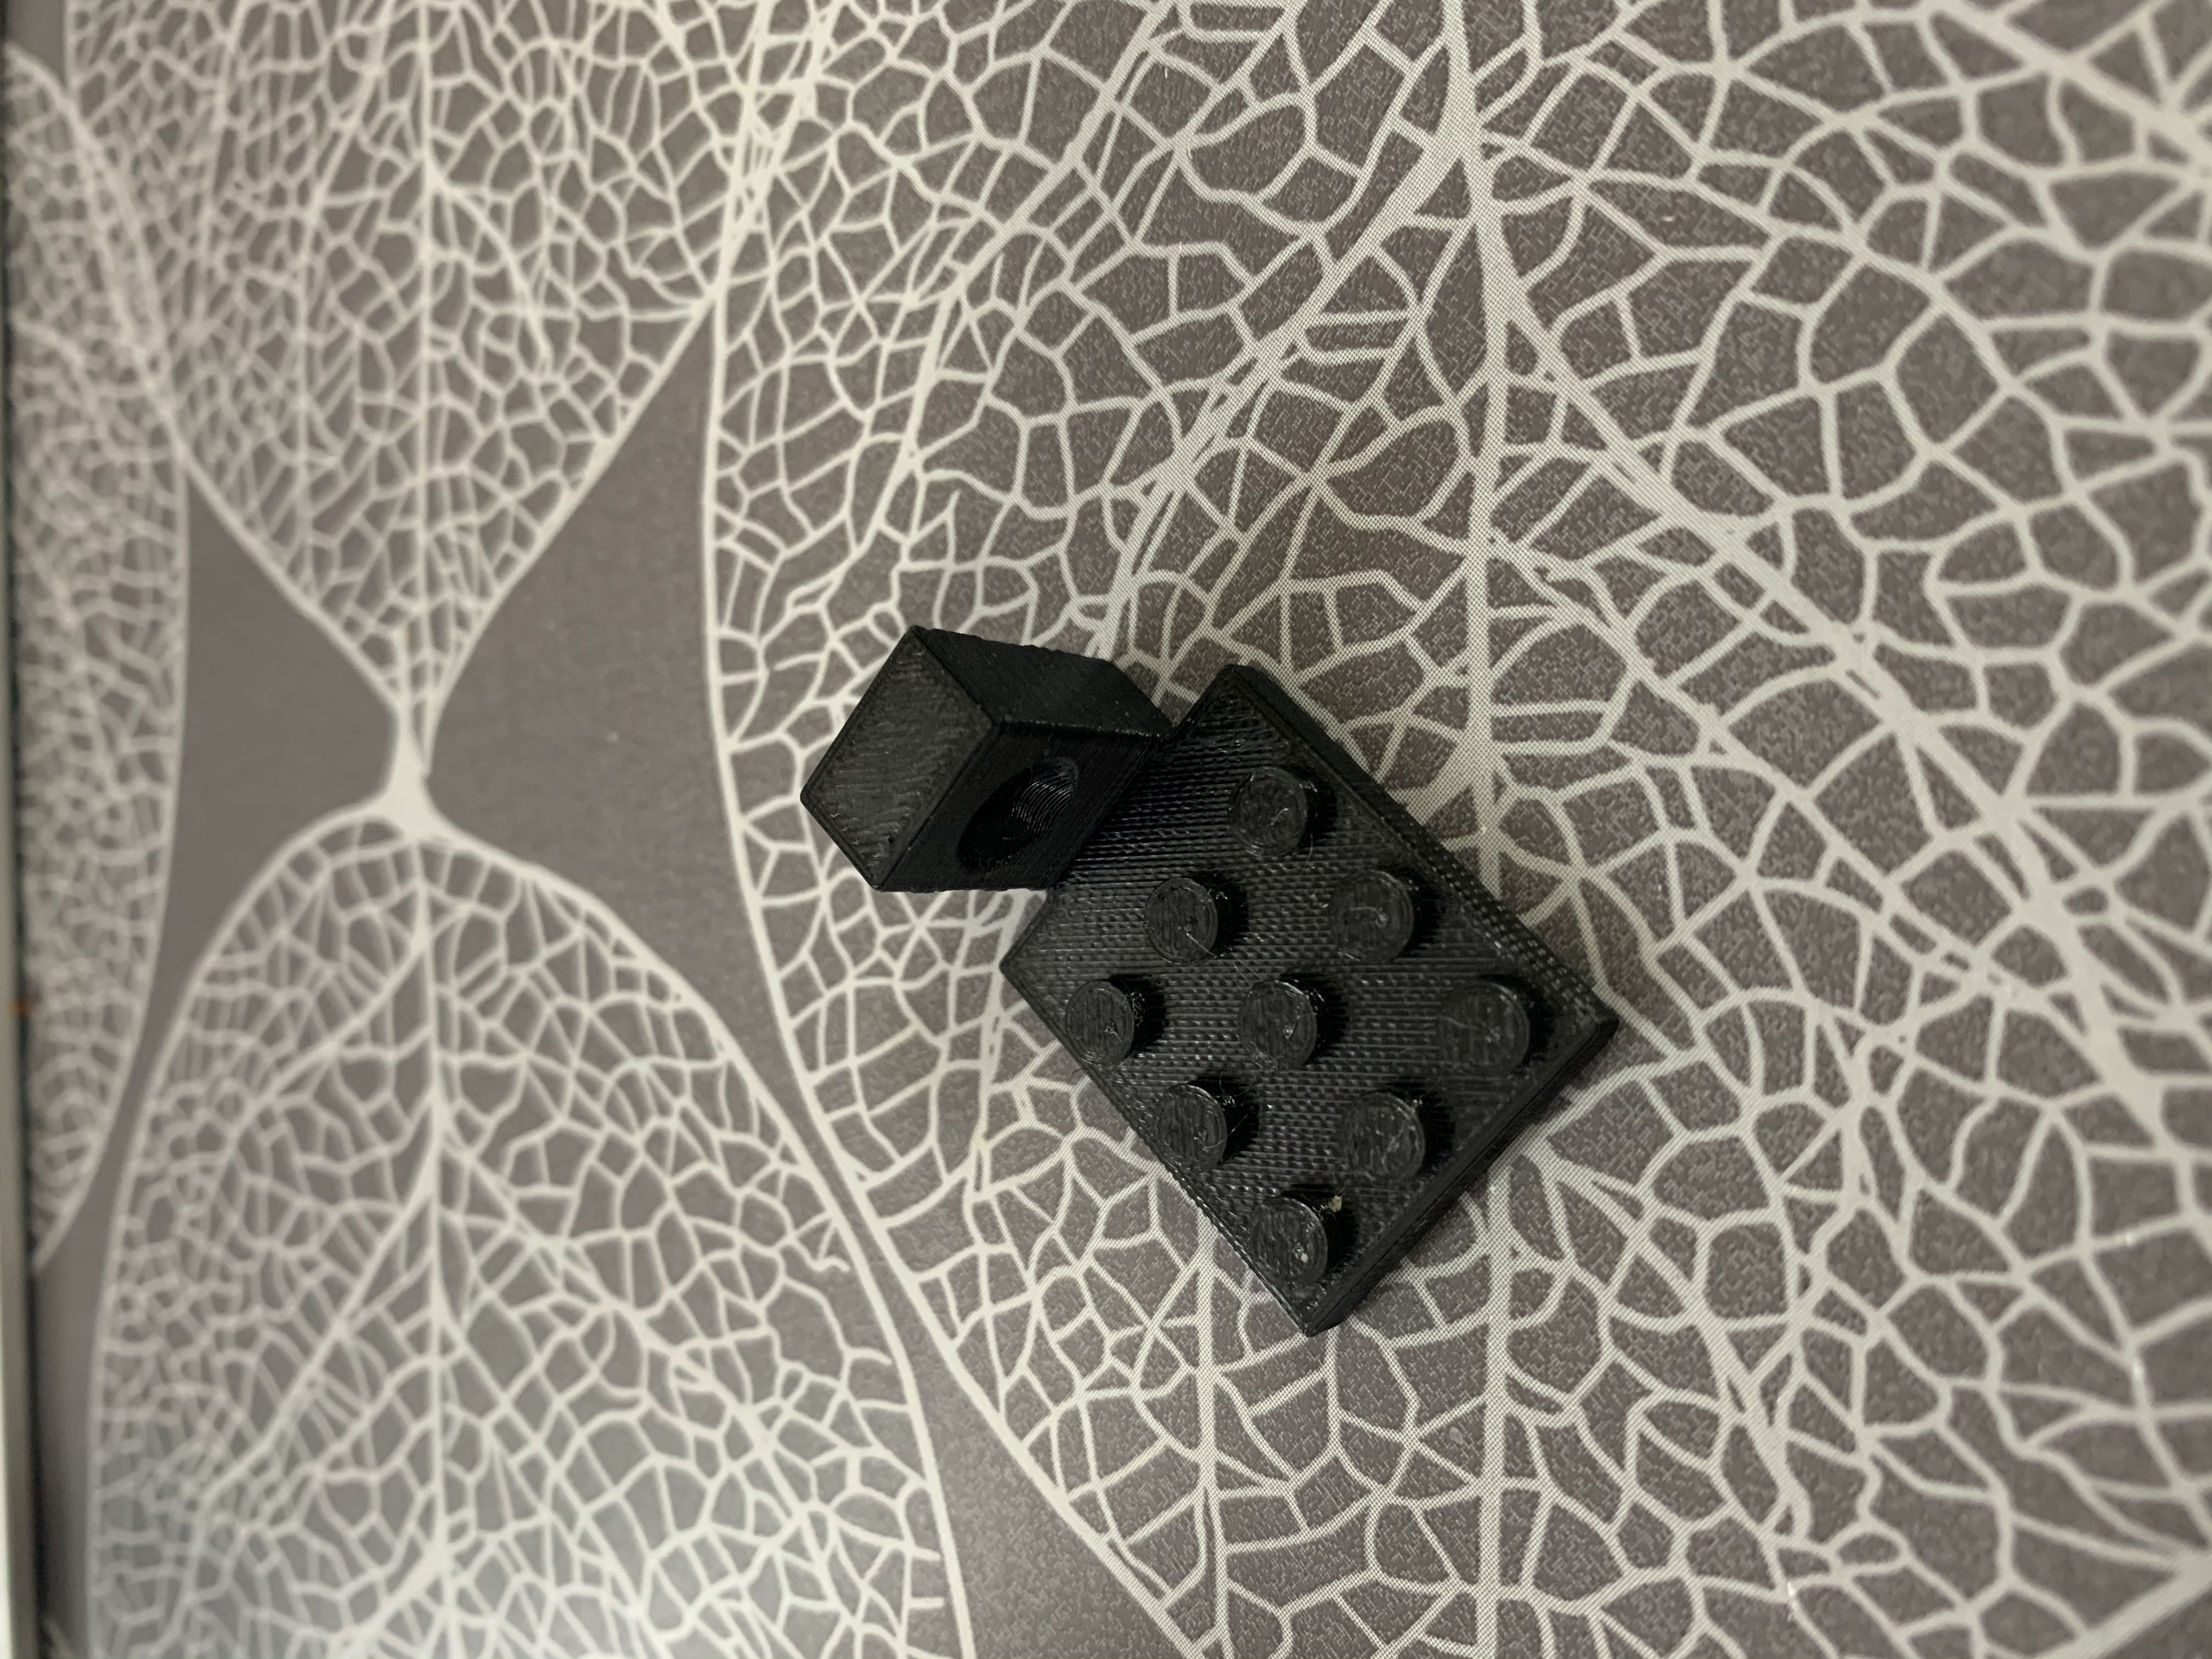 Lego BrickHeadz wall mount/holder